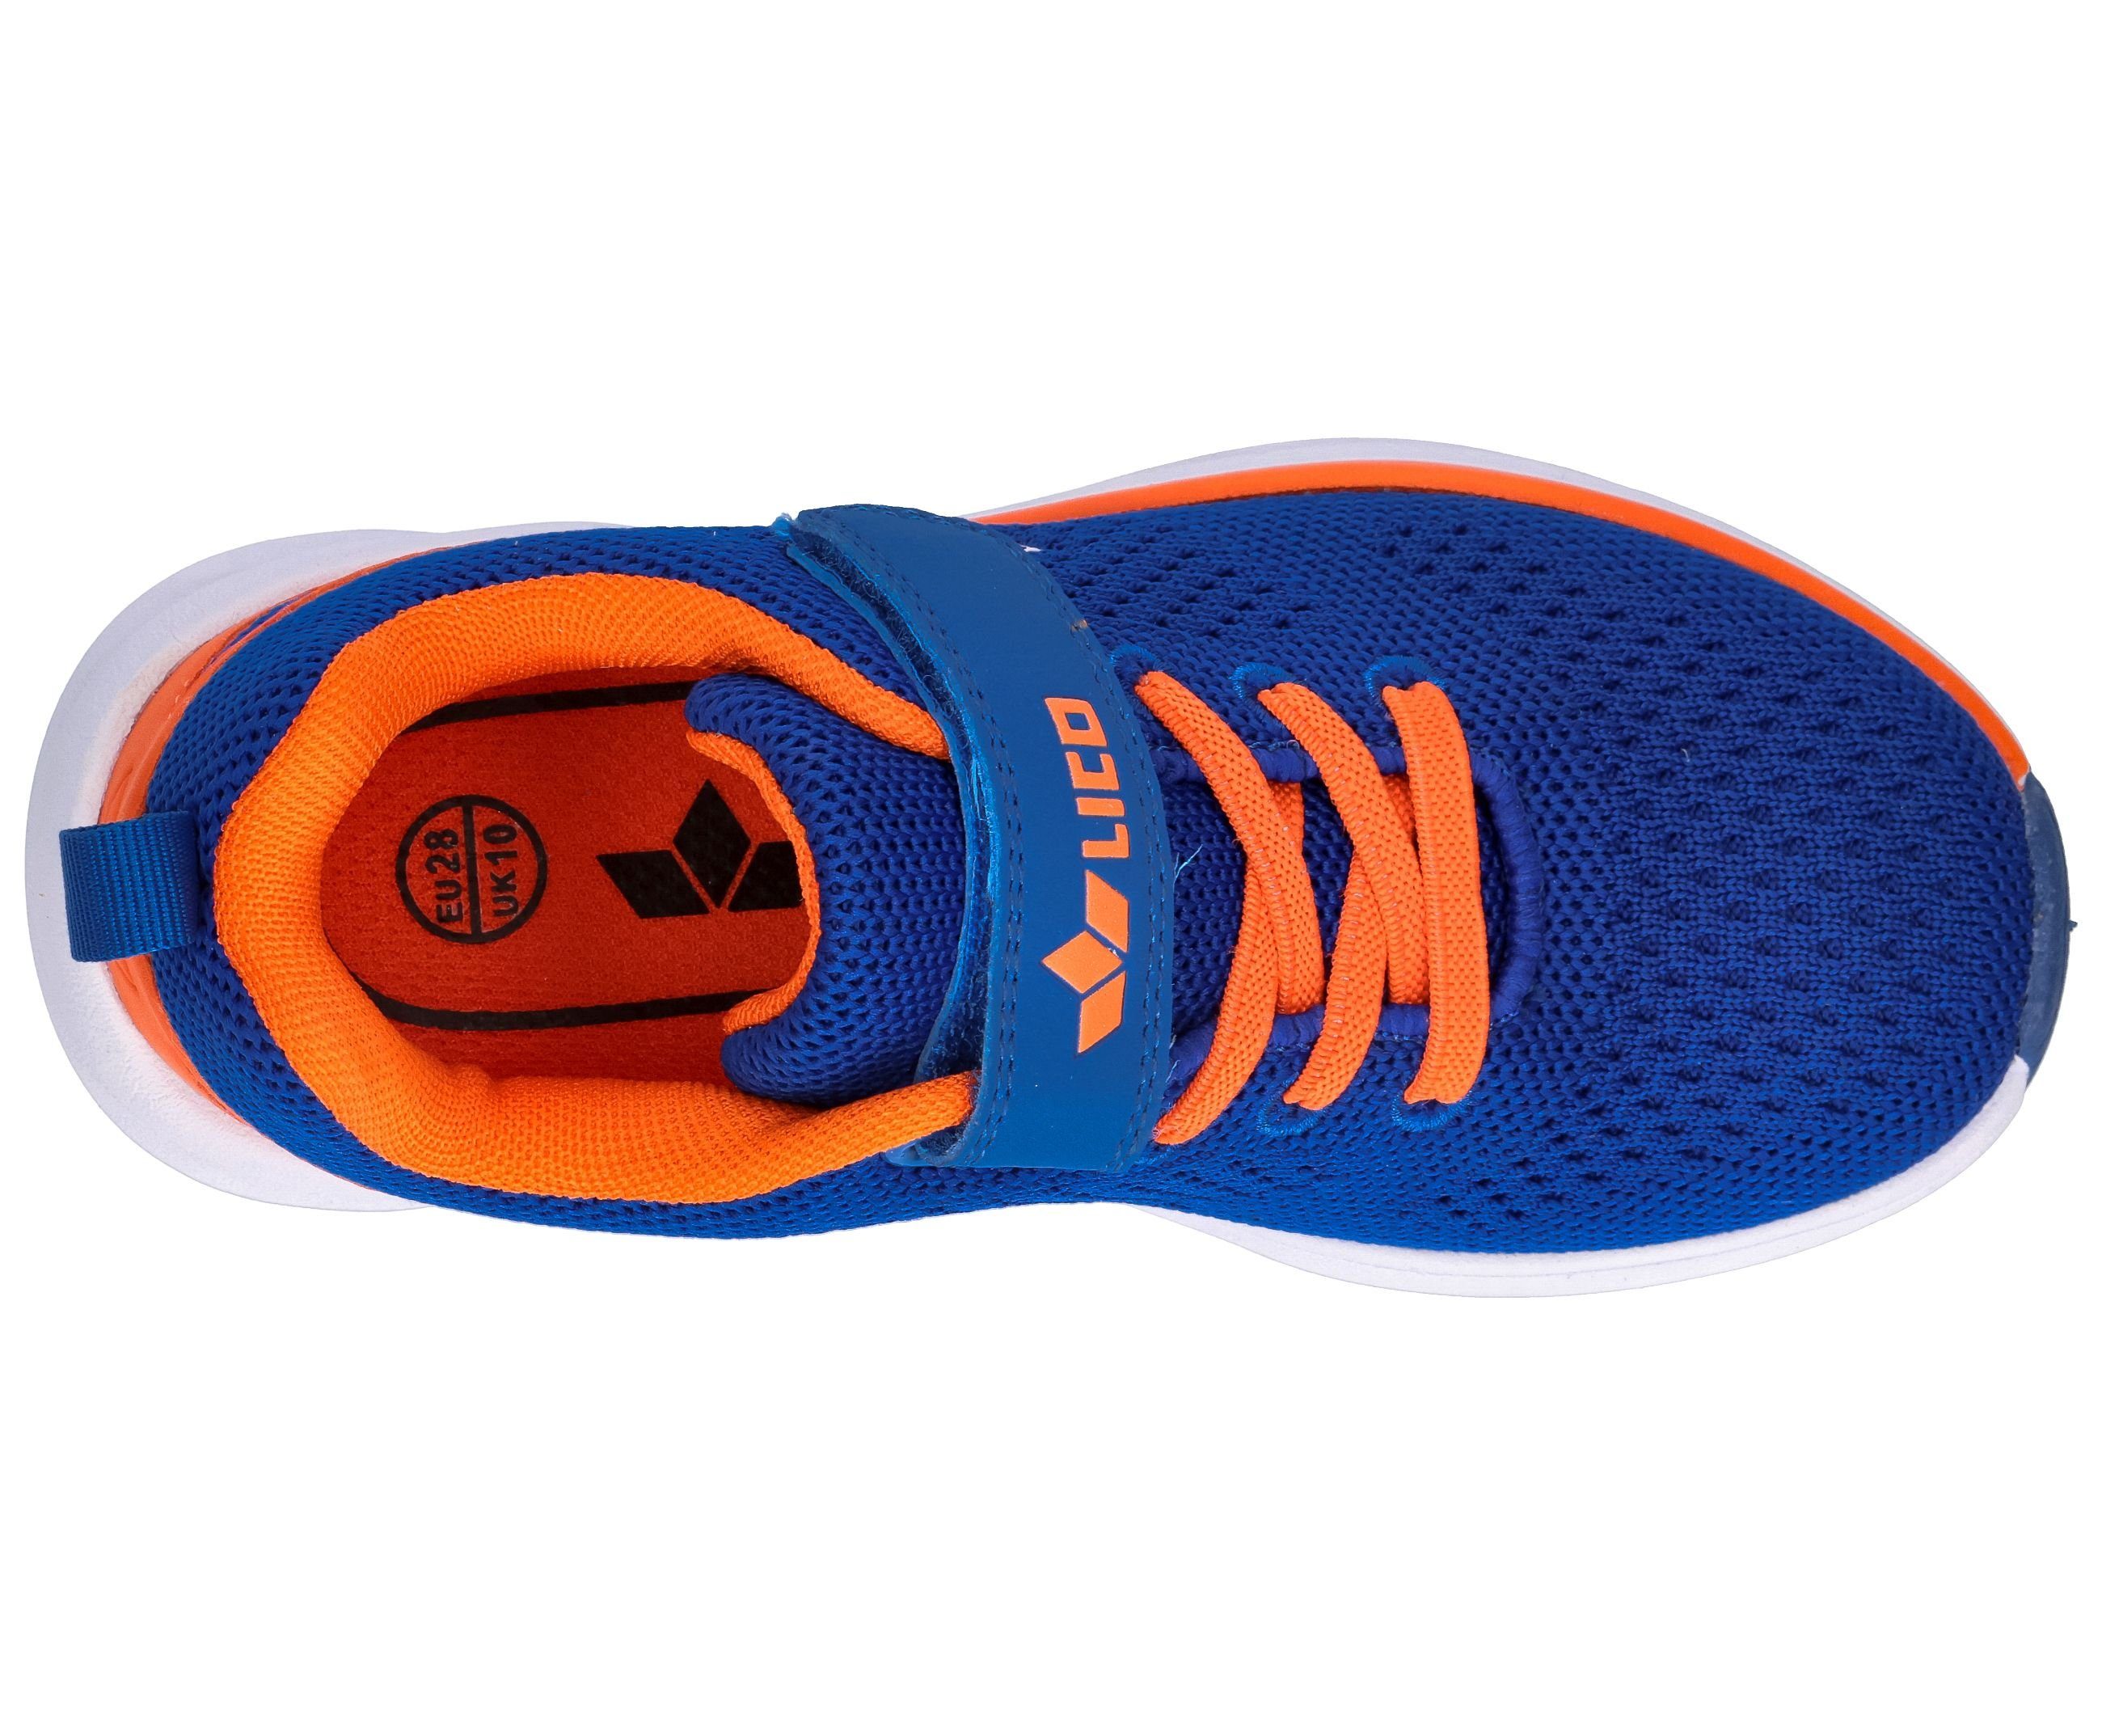 VS blau/orange Lico Sneaker Freizeitschuh Marin